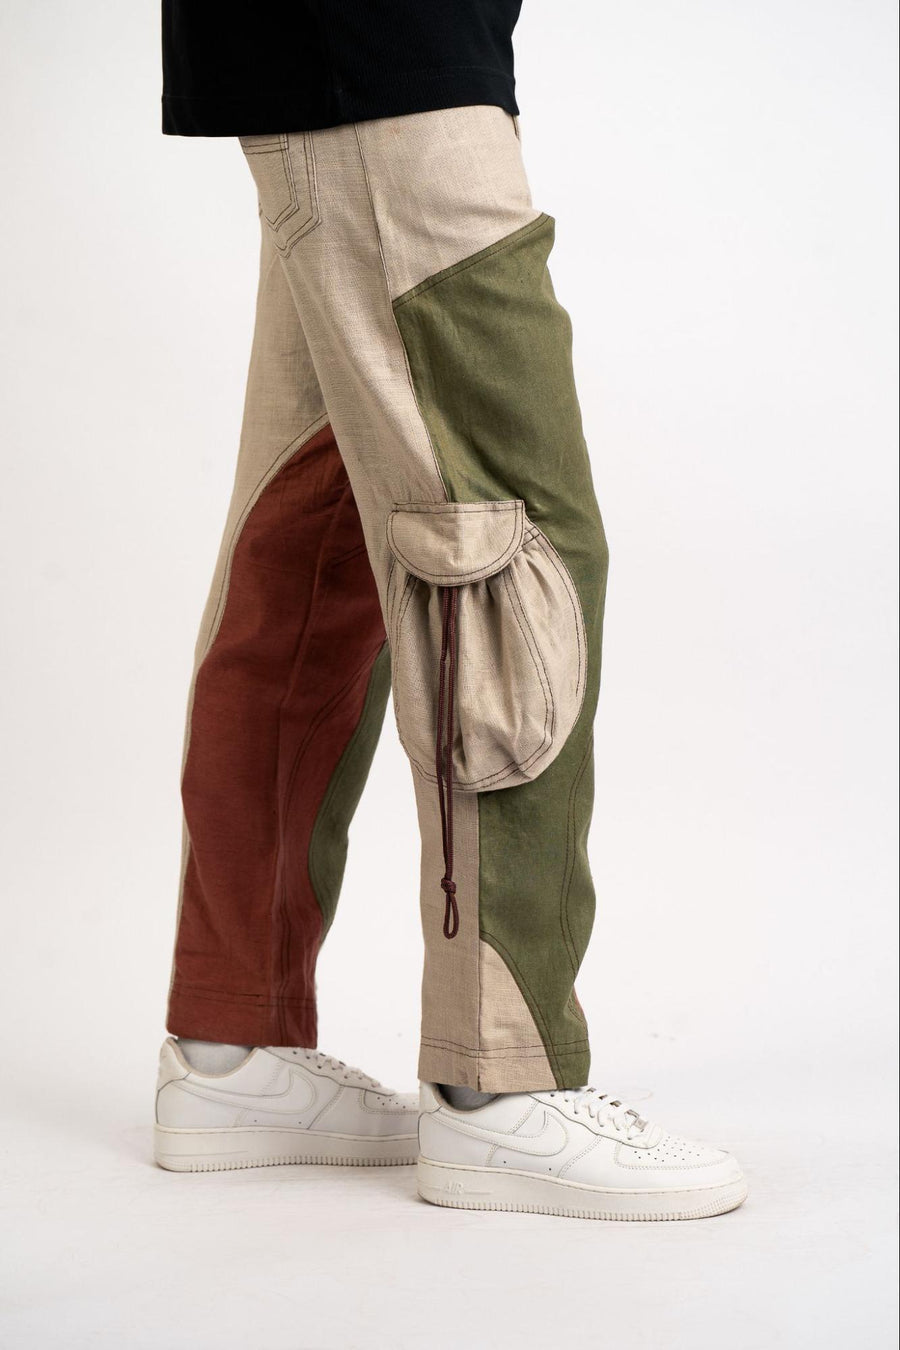 ATTO TETTEH Multicolored Corded Pants